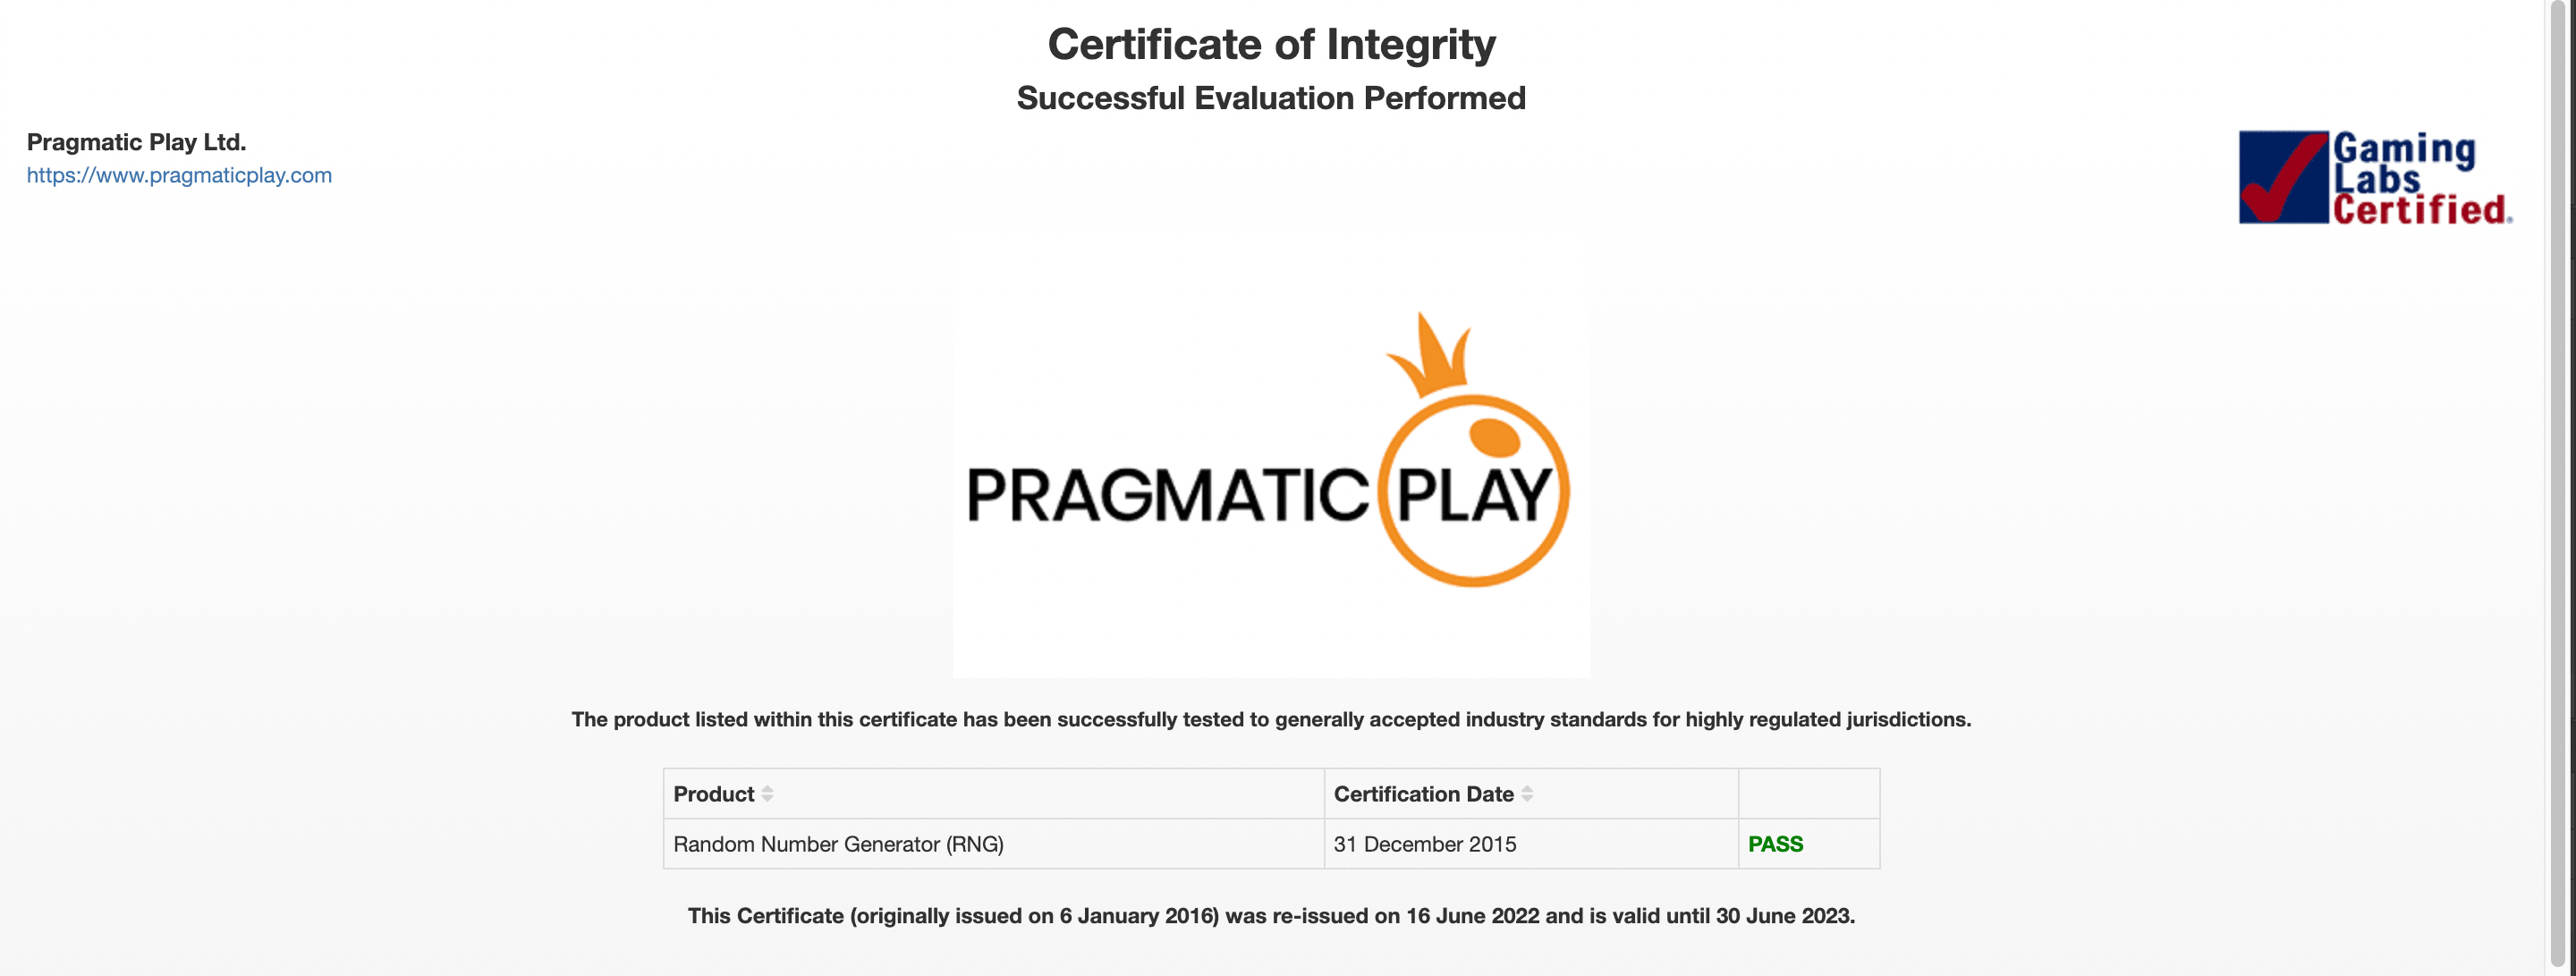 RNG Certified At Pragmatic Play